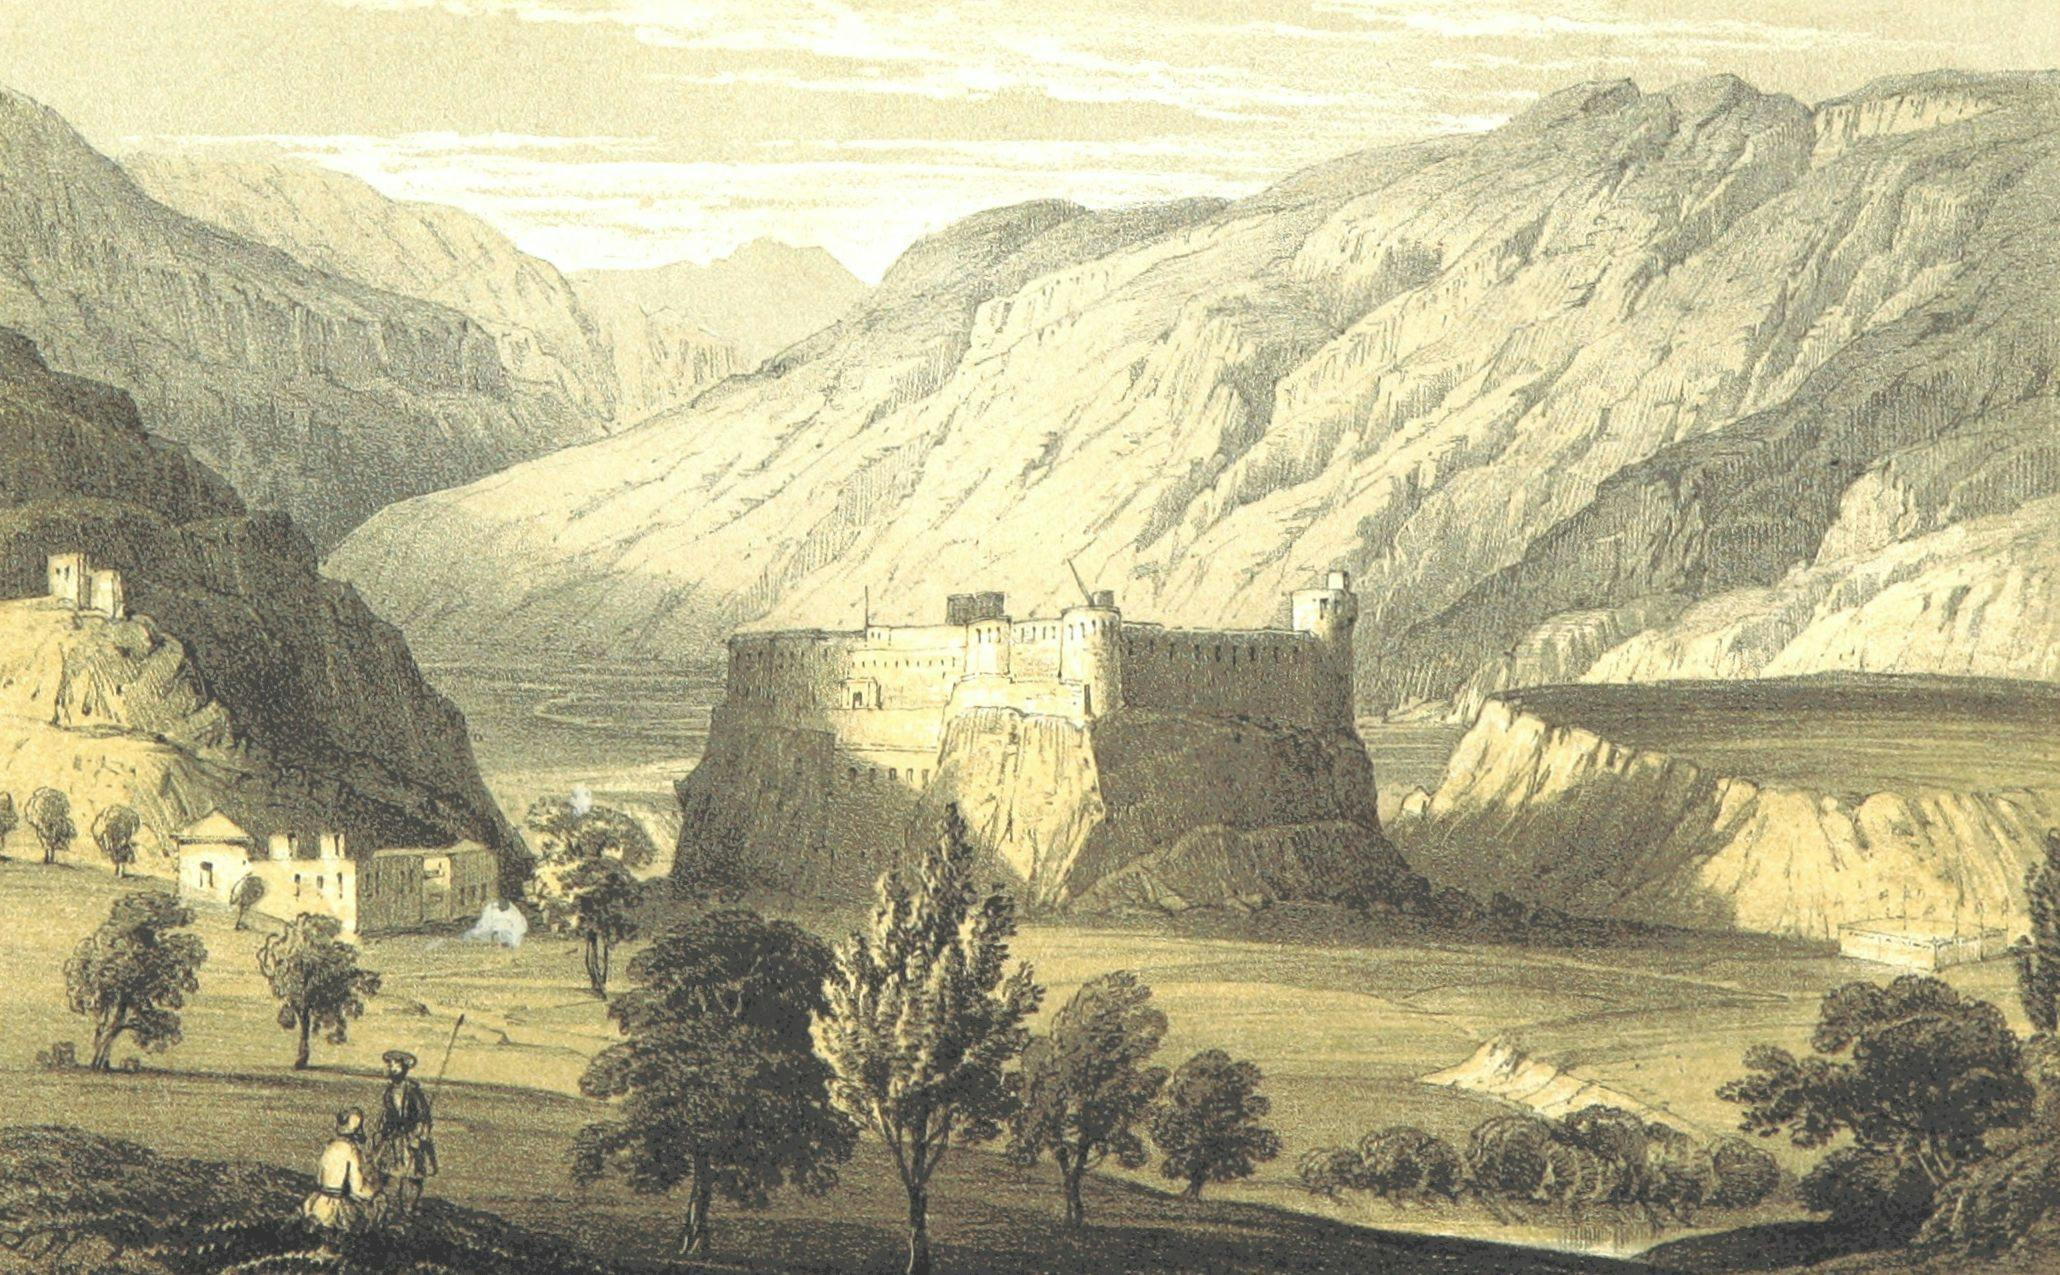 Skardu Fort in Gilgil-Baltistan region, 1850